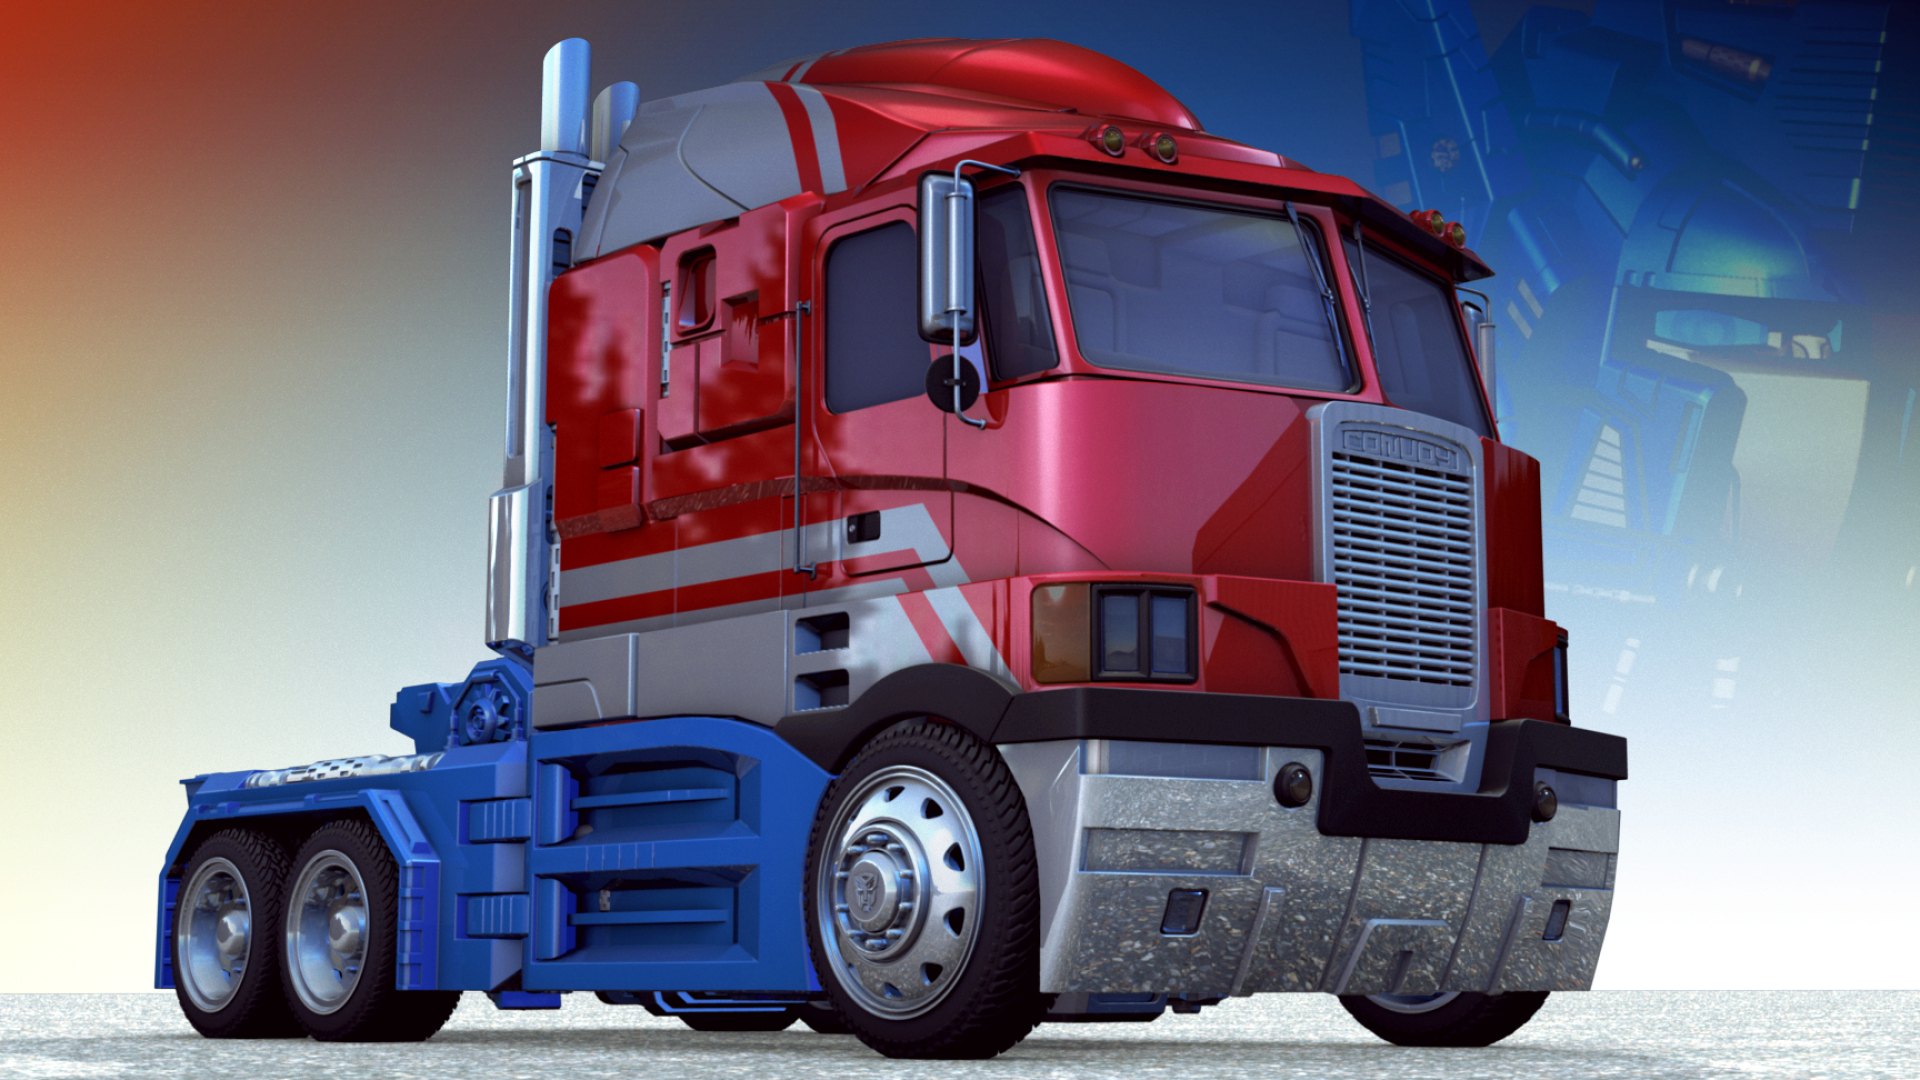 1920x1080 Realistic Classics Optimus Prime Truck Mode | Optimus prime truck, Transformers optimus prime, Optimus prime